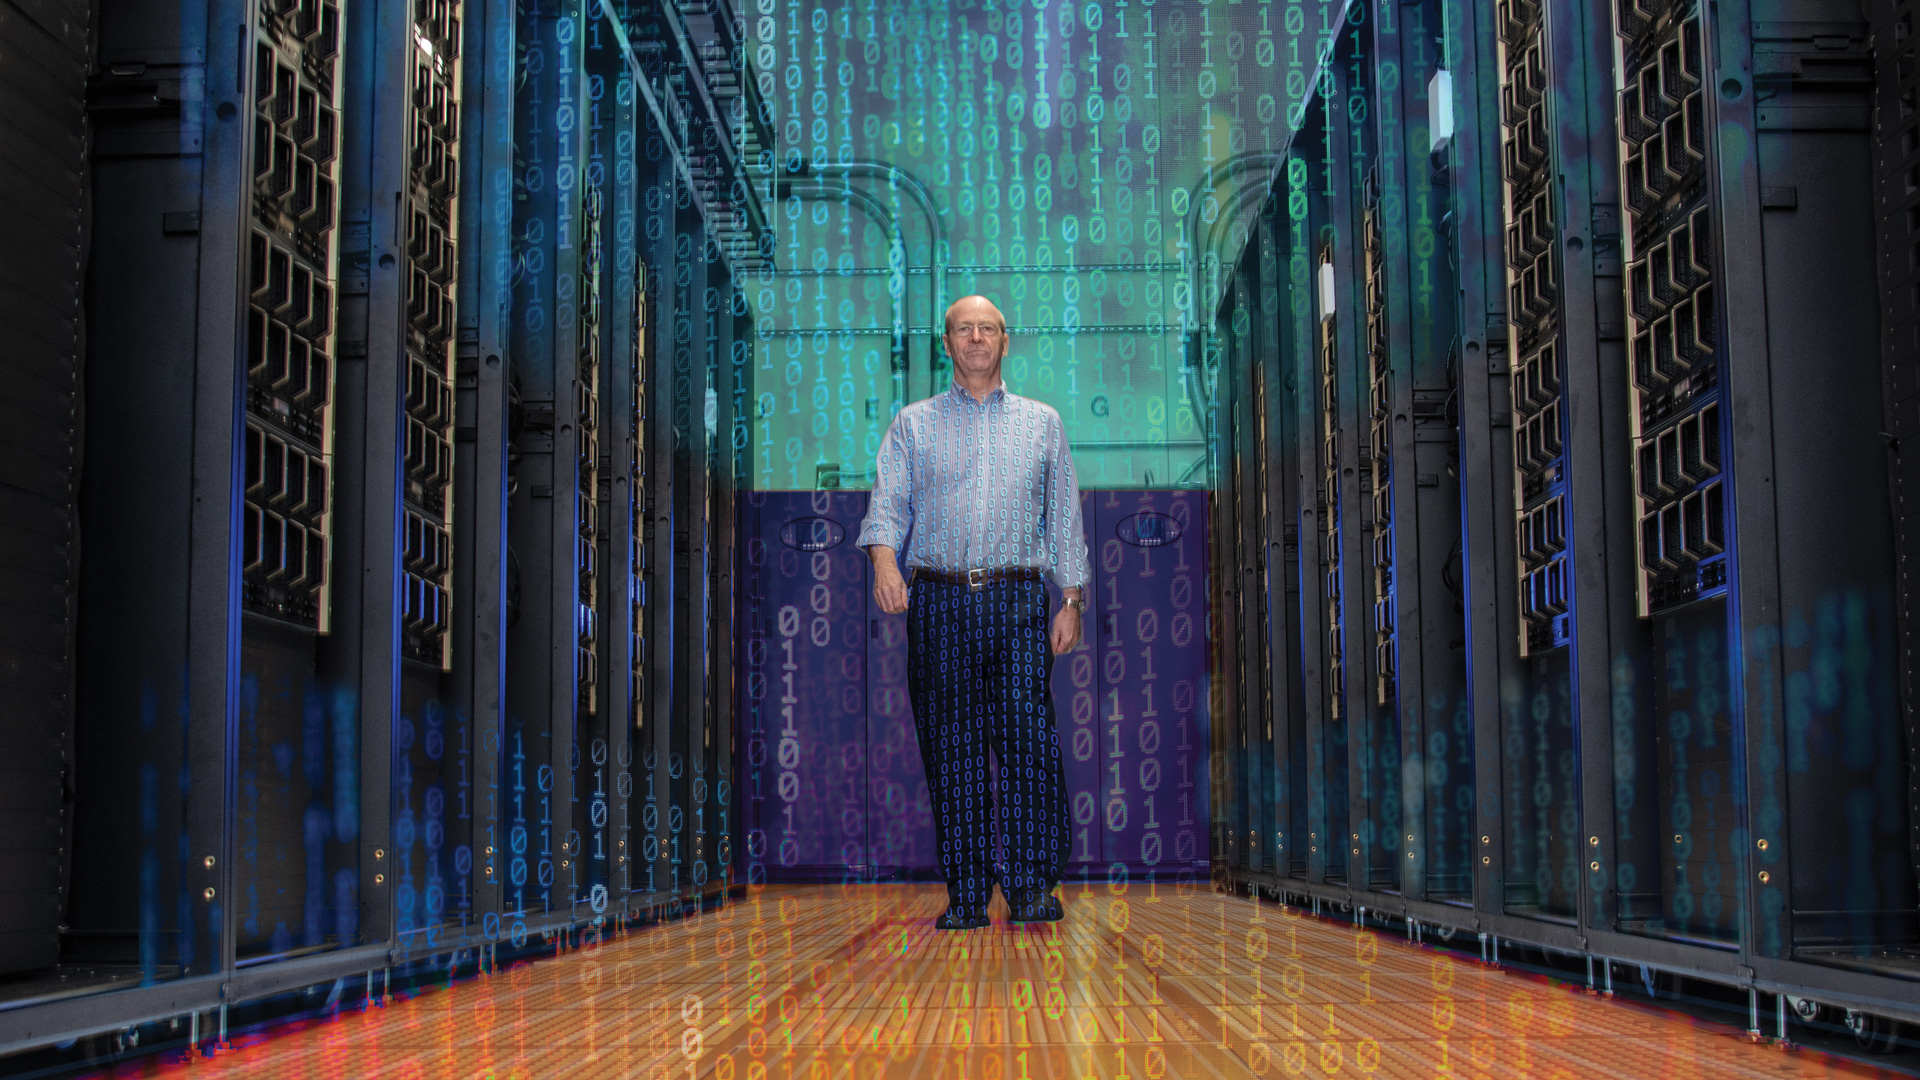 Erik Deumens walks down the aisle of server towers inside UF's Hi-Per Gator Super Computer